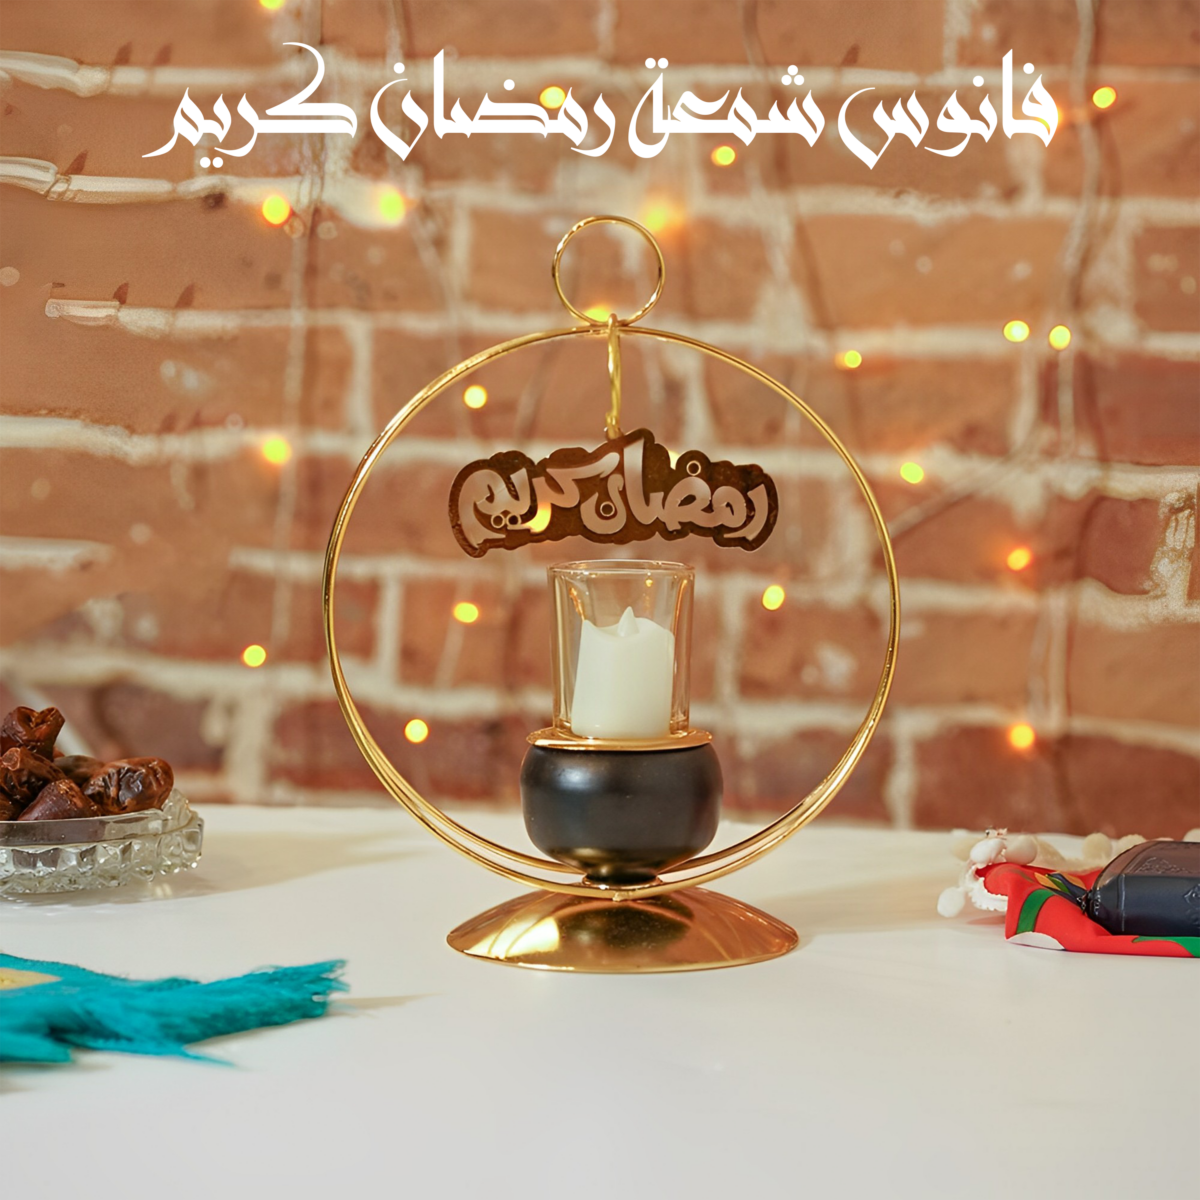 فانوس شمعة رمضان كريم